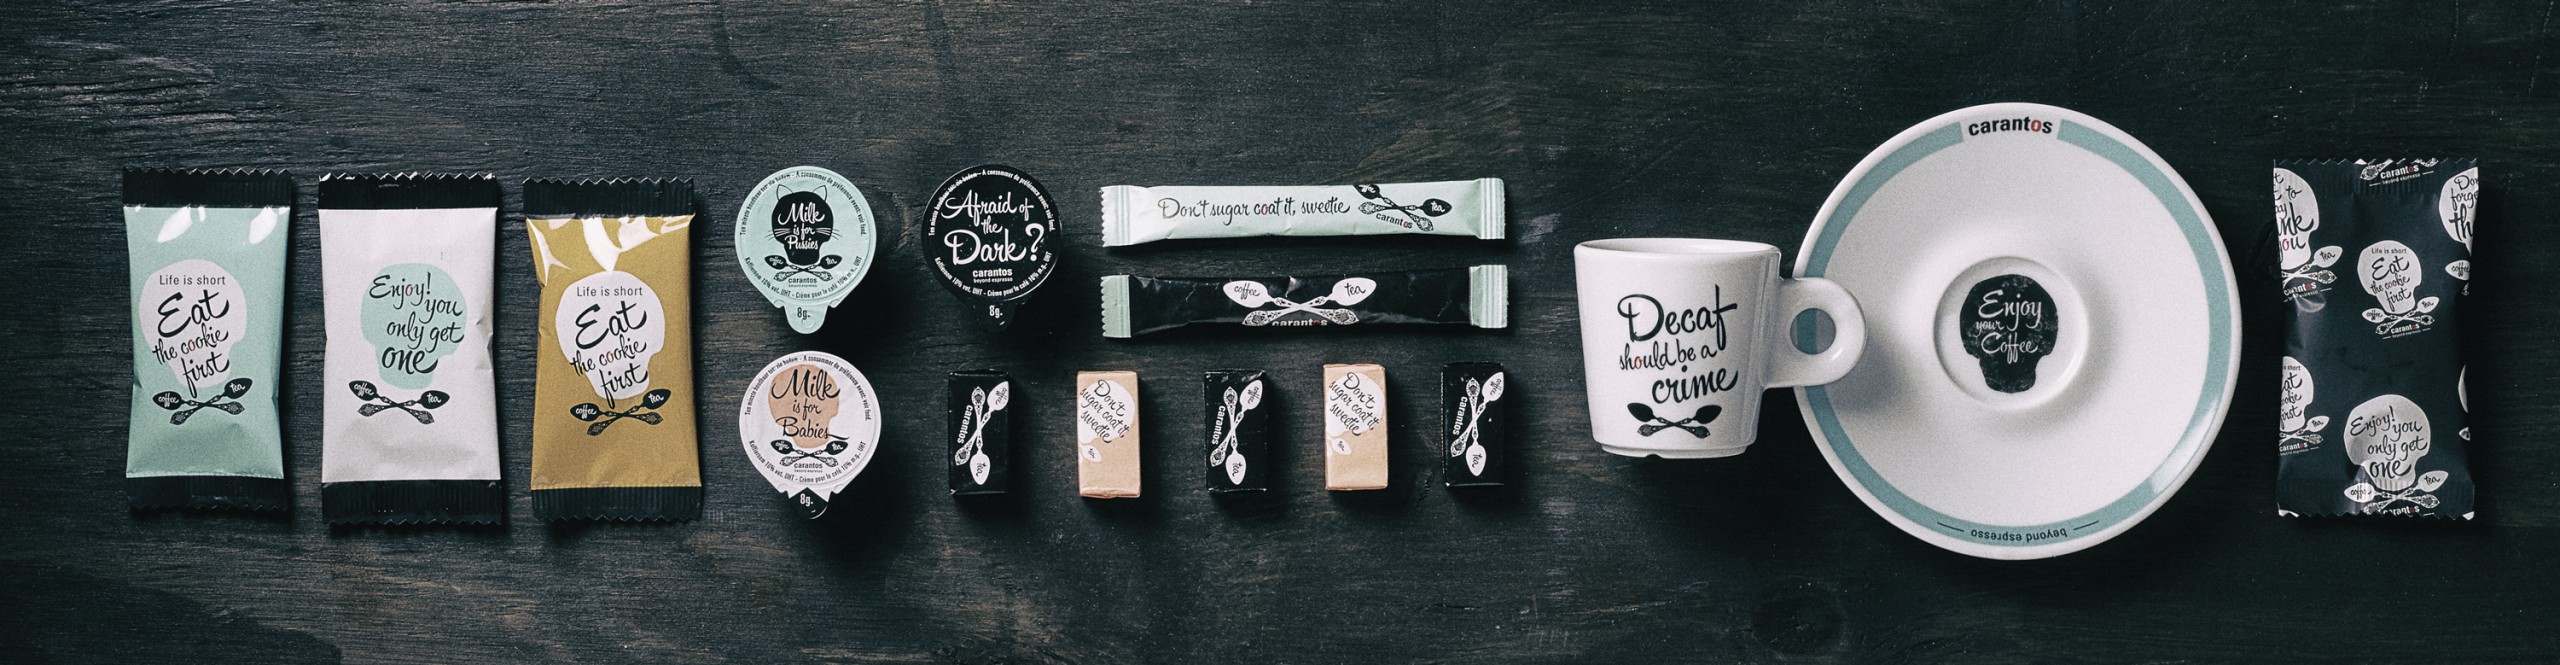 Quatre Mains package design - Package design Line up, Coffee, Tea, Carantos, Packaging